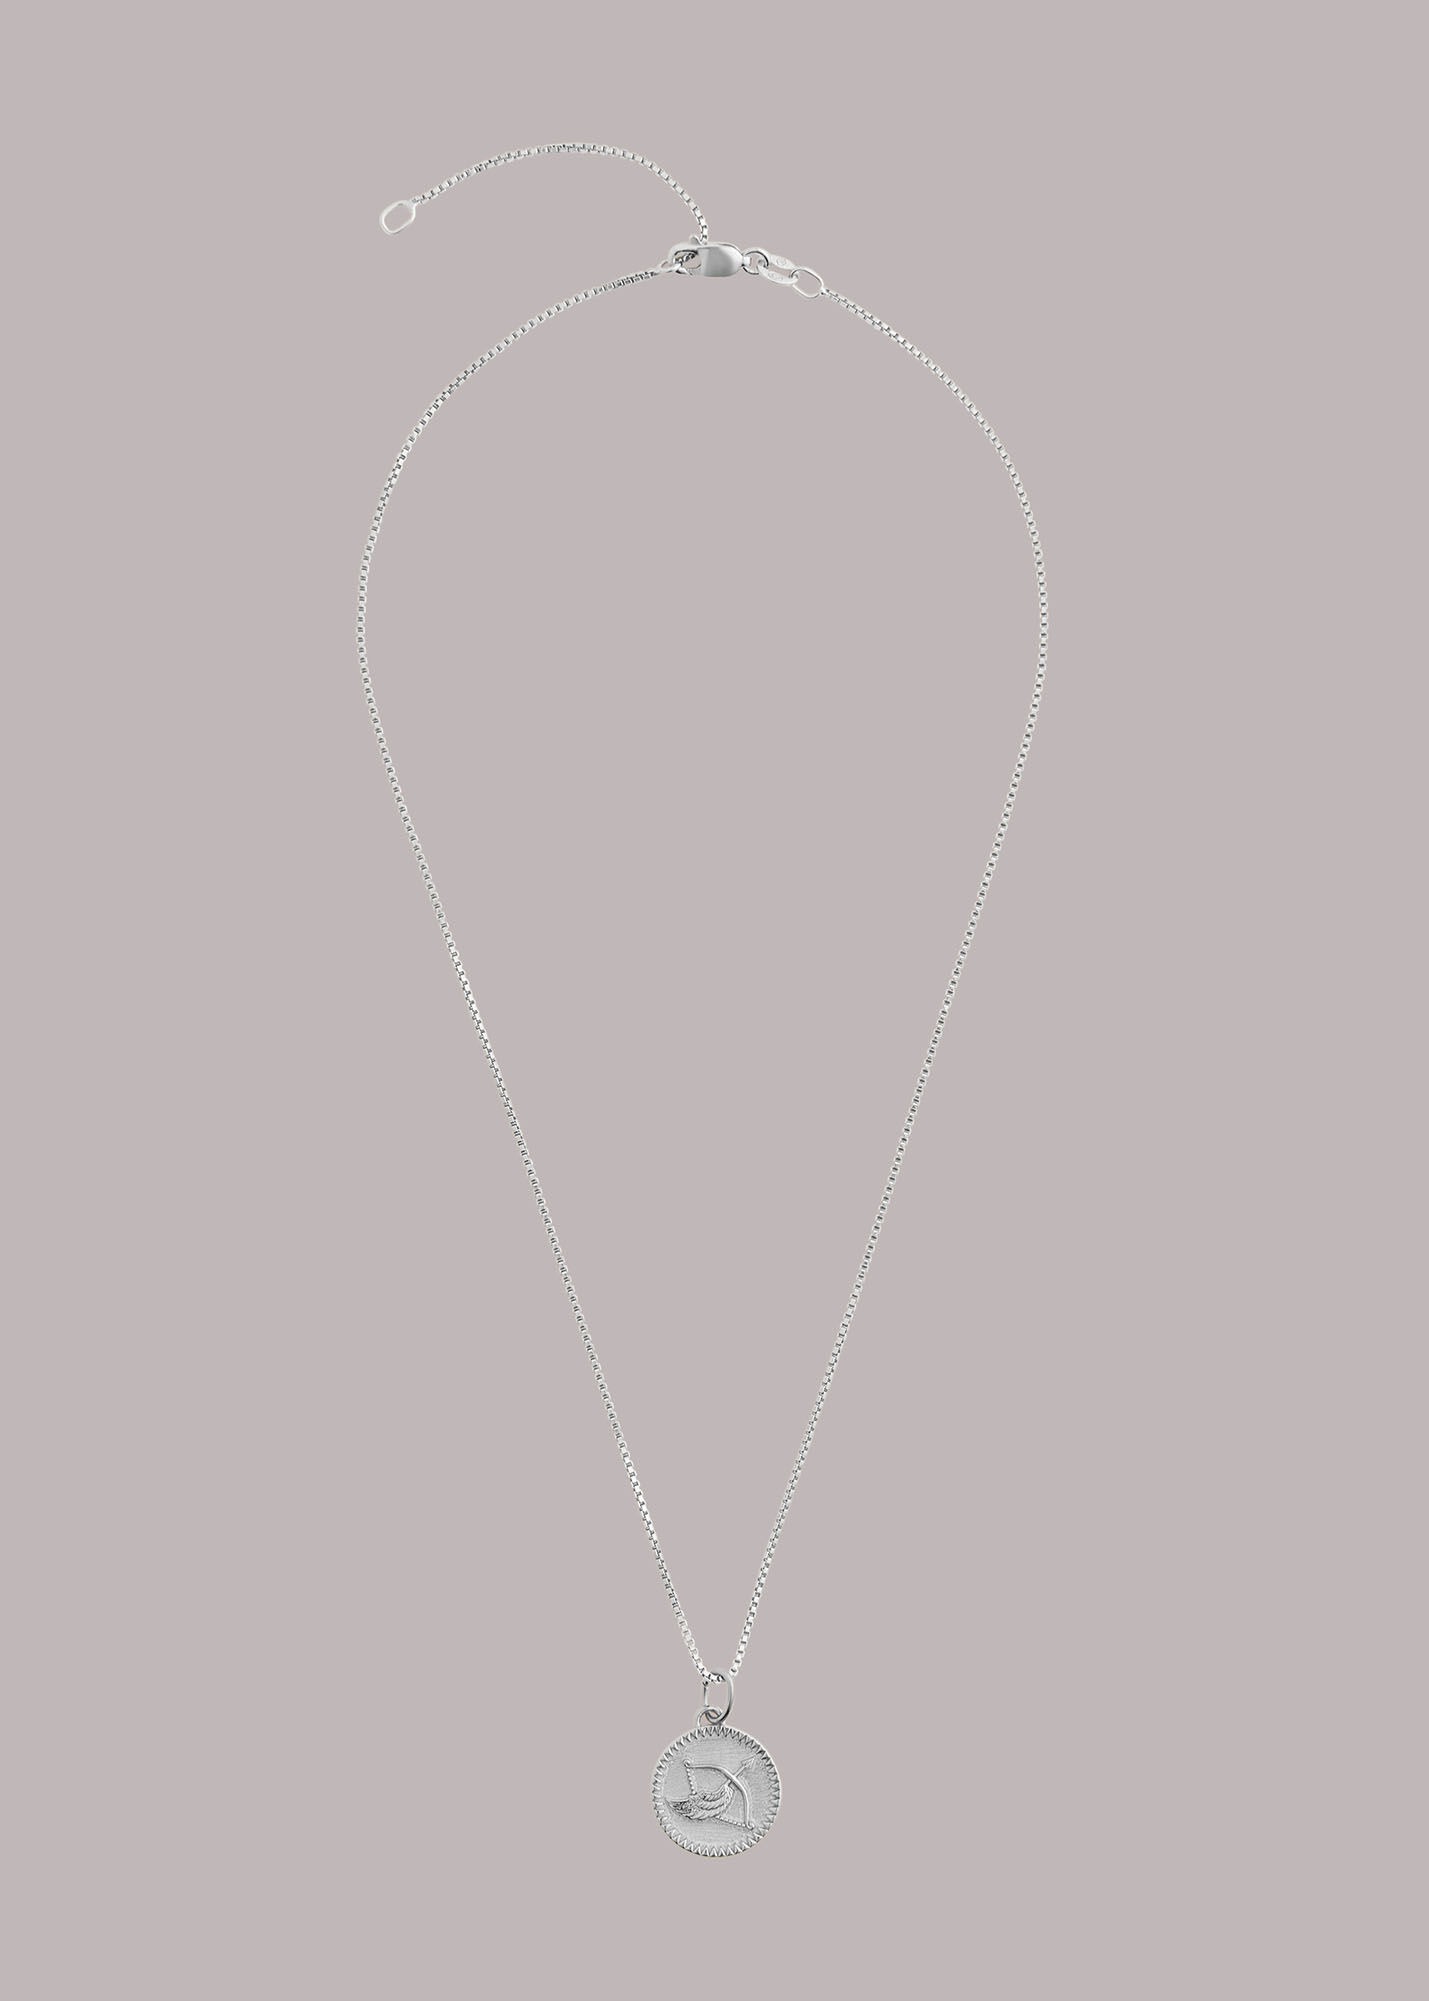 12 zodiac signs pendant necklace personalized| Alibaba.com